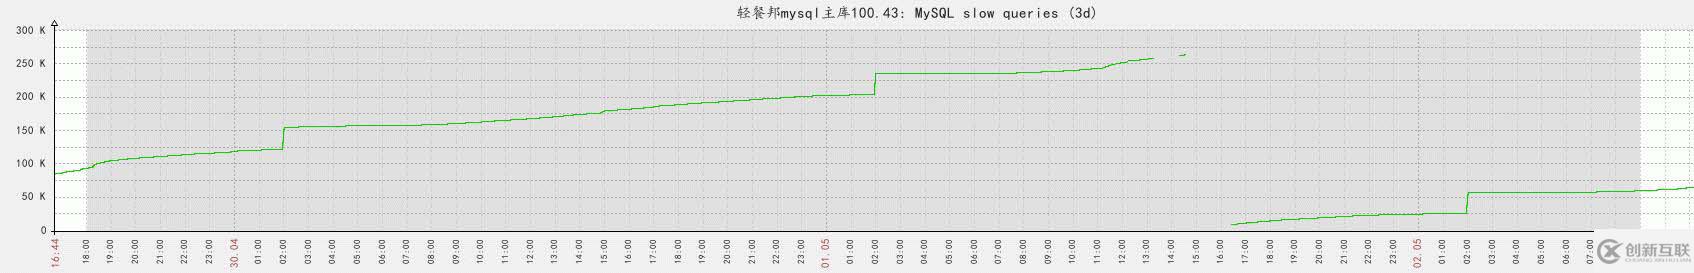 ubuntu mysql5.6 占用CPU过高以致机器卡死该怎么处理